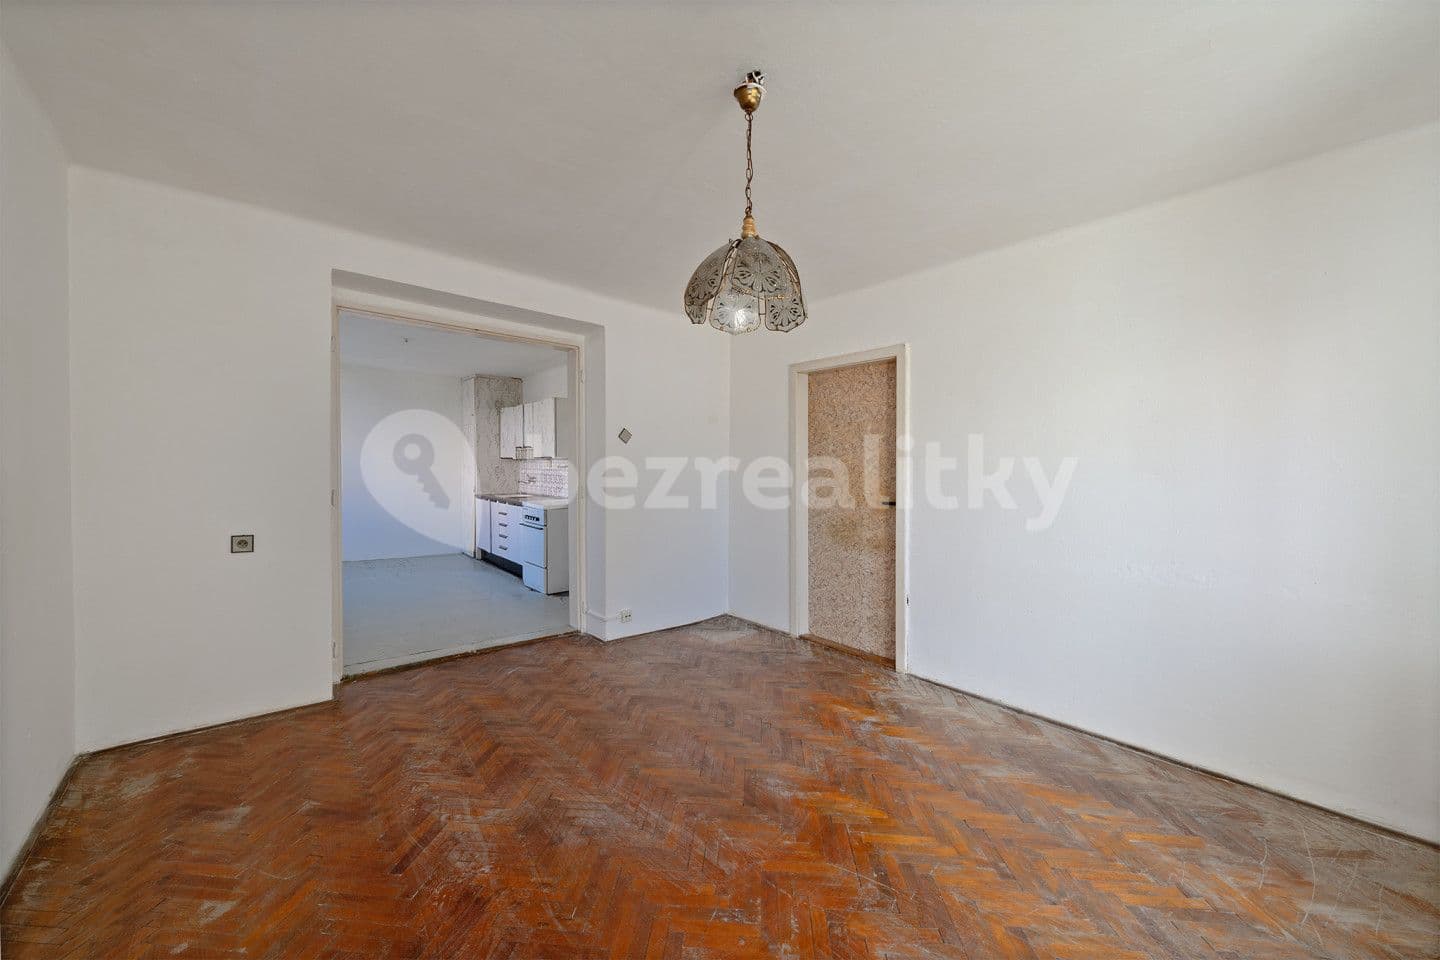 2 bedroom flat for sale, 47 m², U nemocnice, Teplice, Ústecký Region